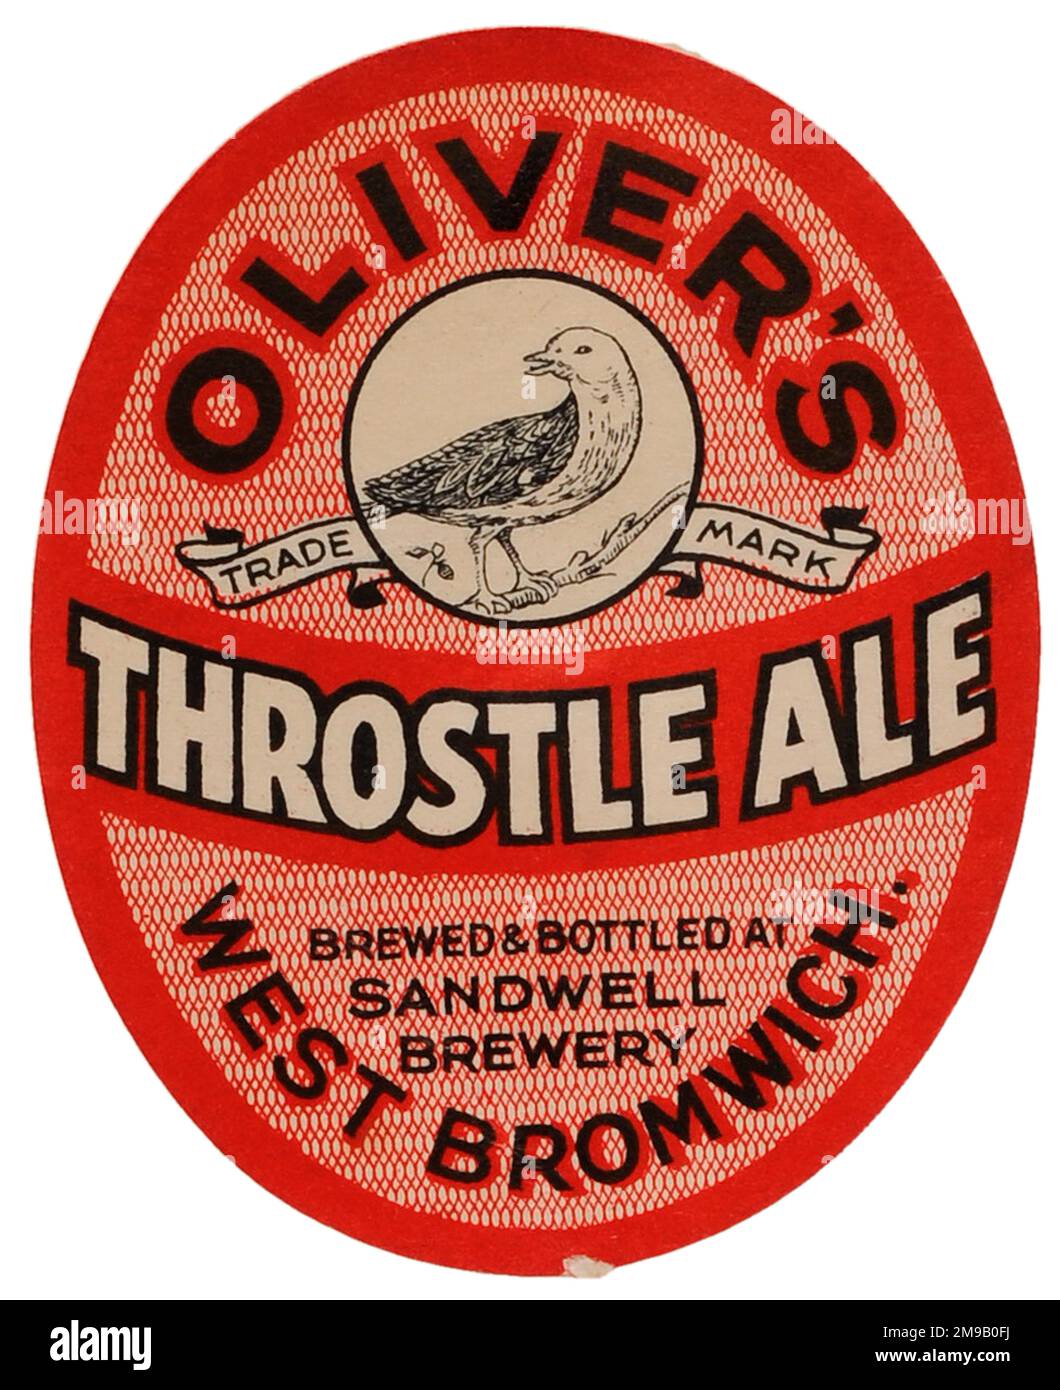 Oliver's Throstle Ale Stock Photo